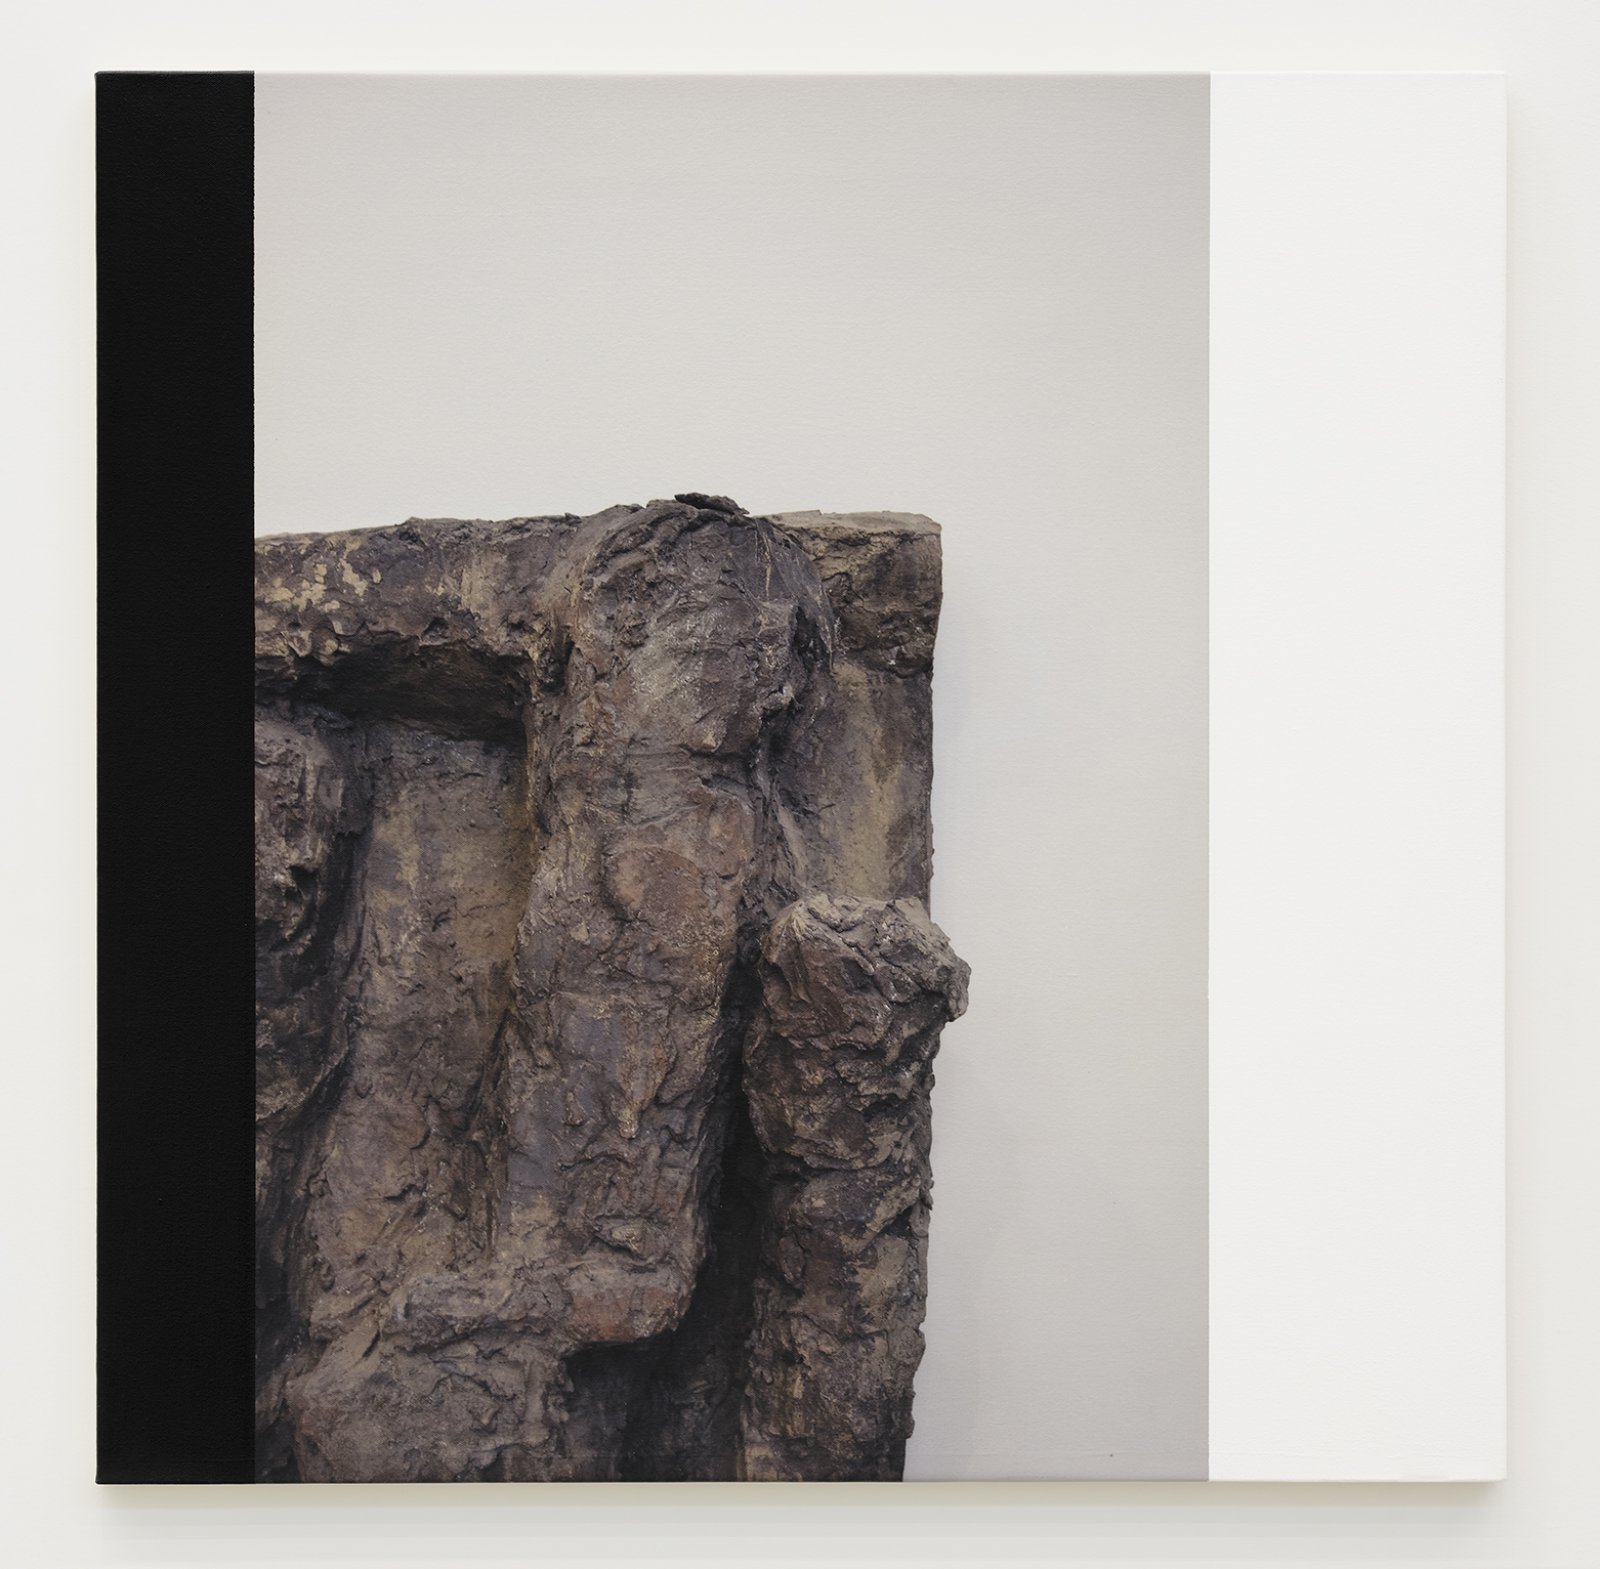 Ian Wallace, Untitled (The Hans Josephsohn Series), 2009, photolaminate and acrylic on canvas, triptych, each 36 x 36 in. (92 x 92 cm)